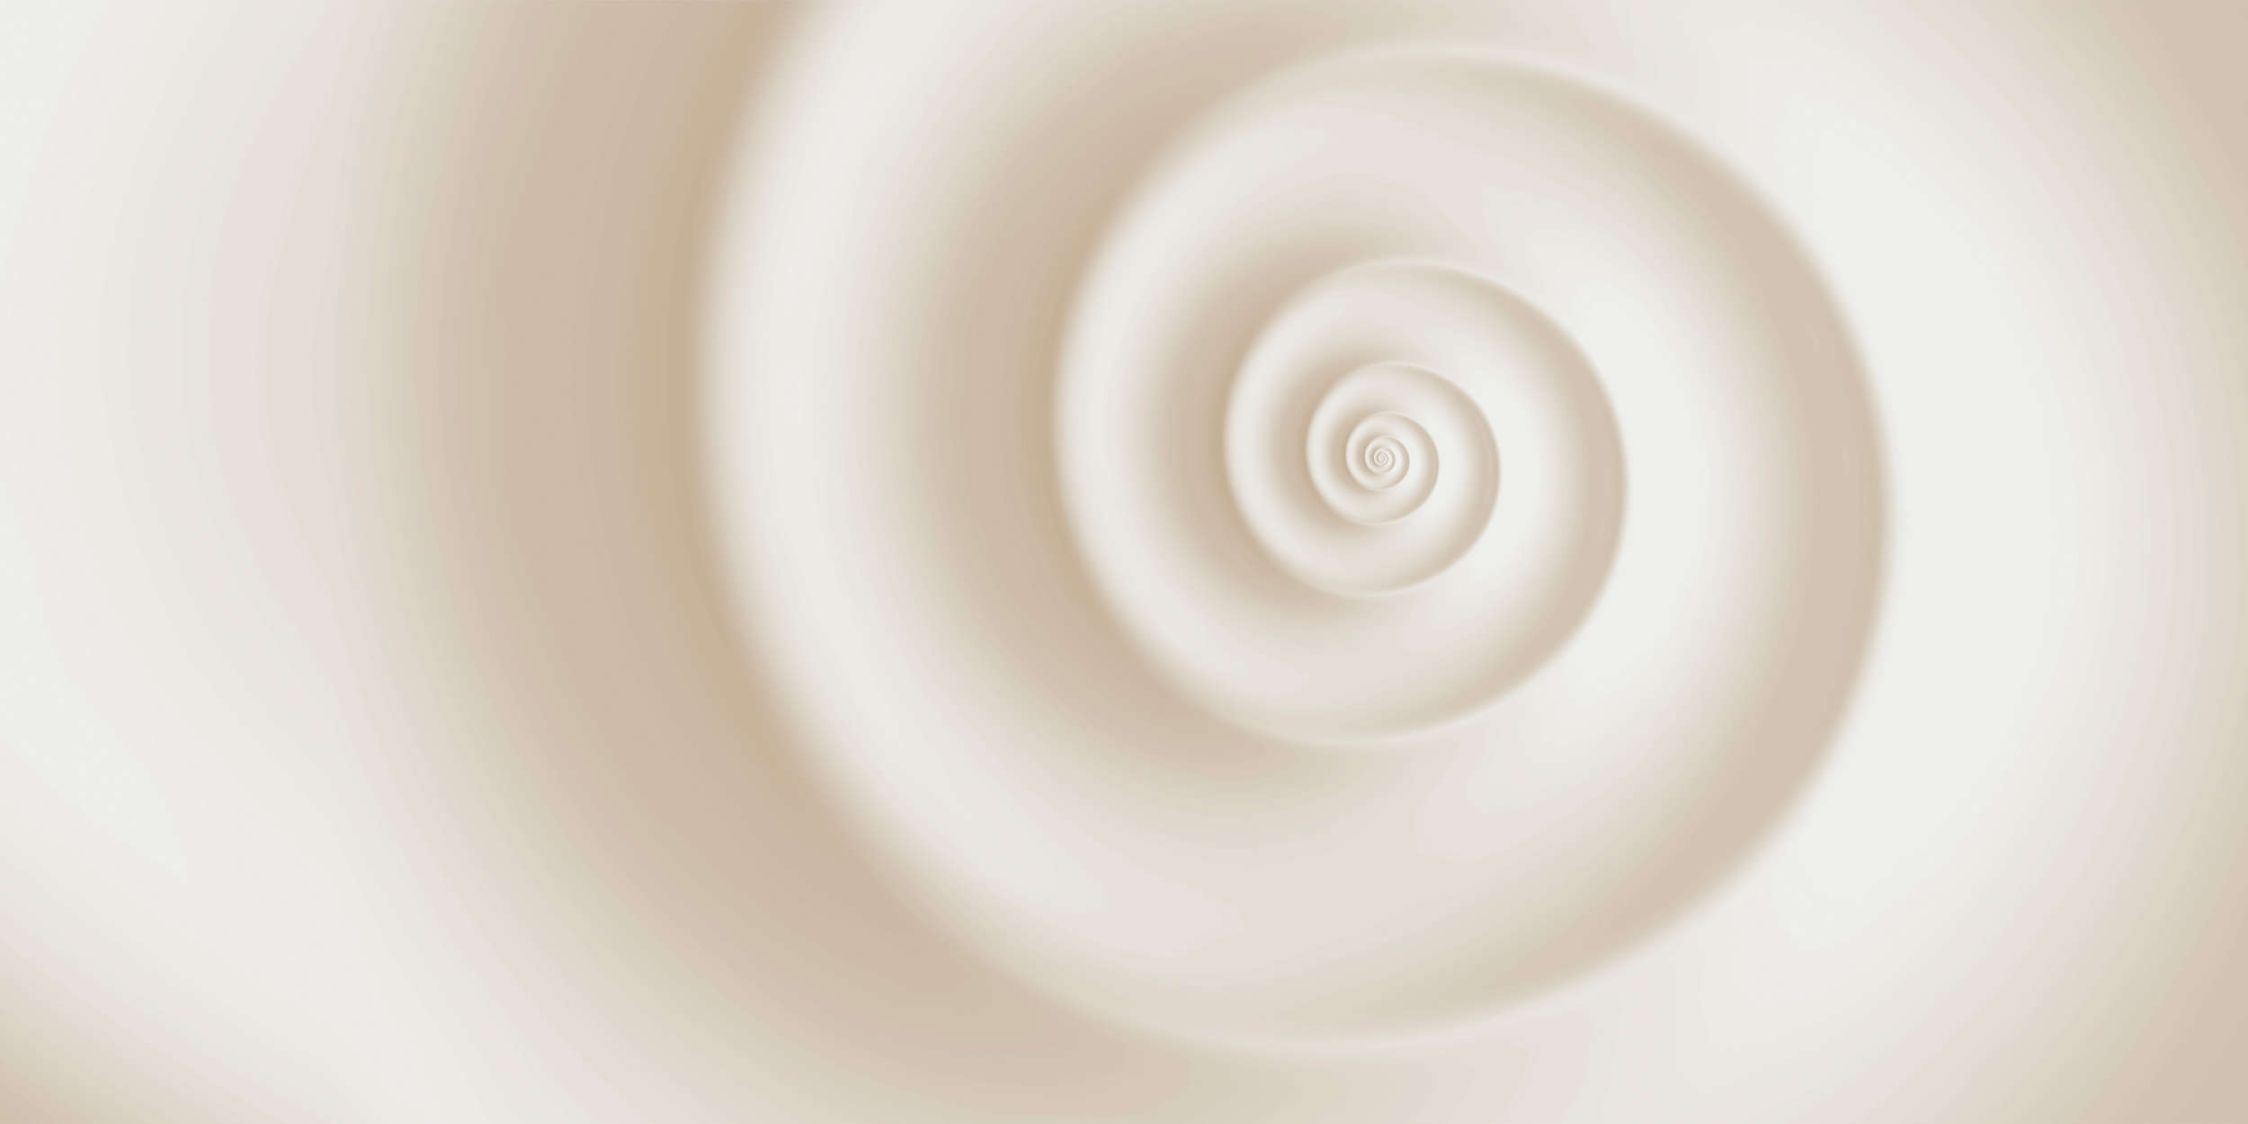             Fotomural »remolino« - Ligero dibujo en espiral - Tela no tejida con textura ligera
        